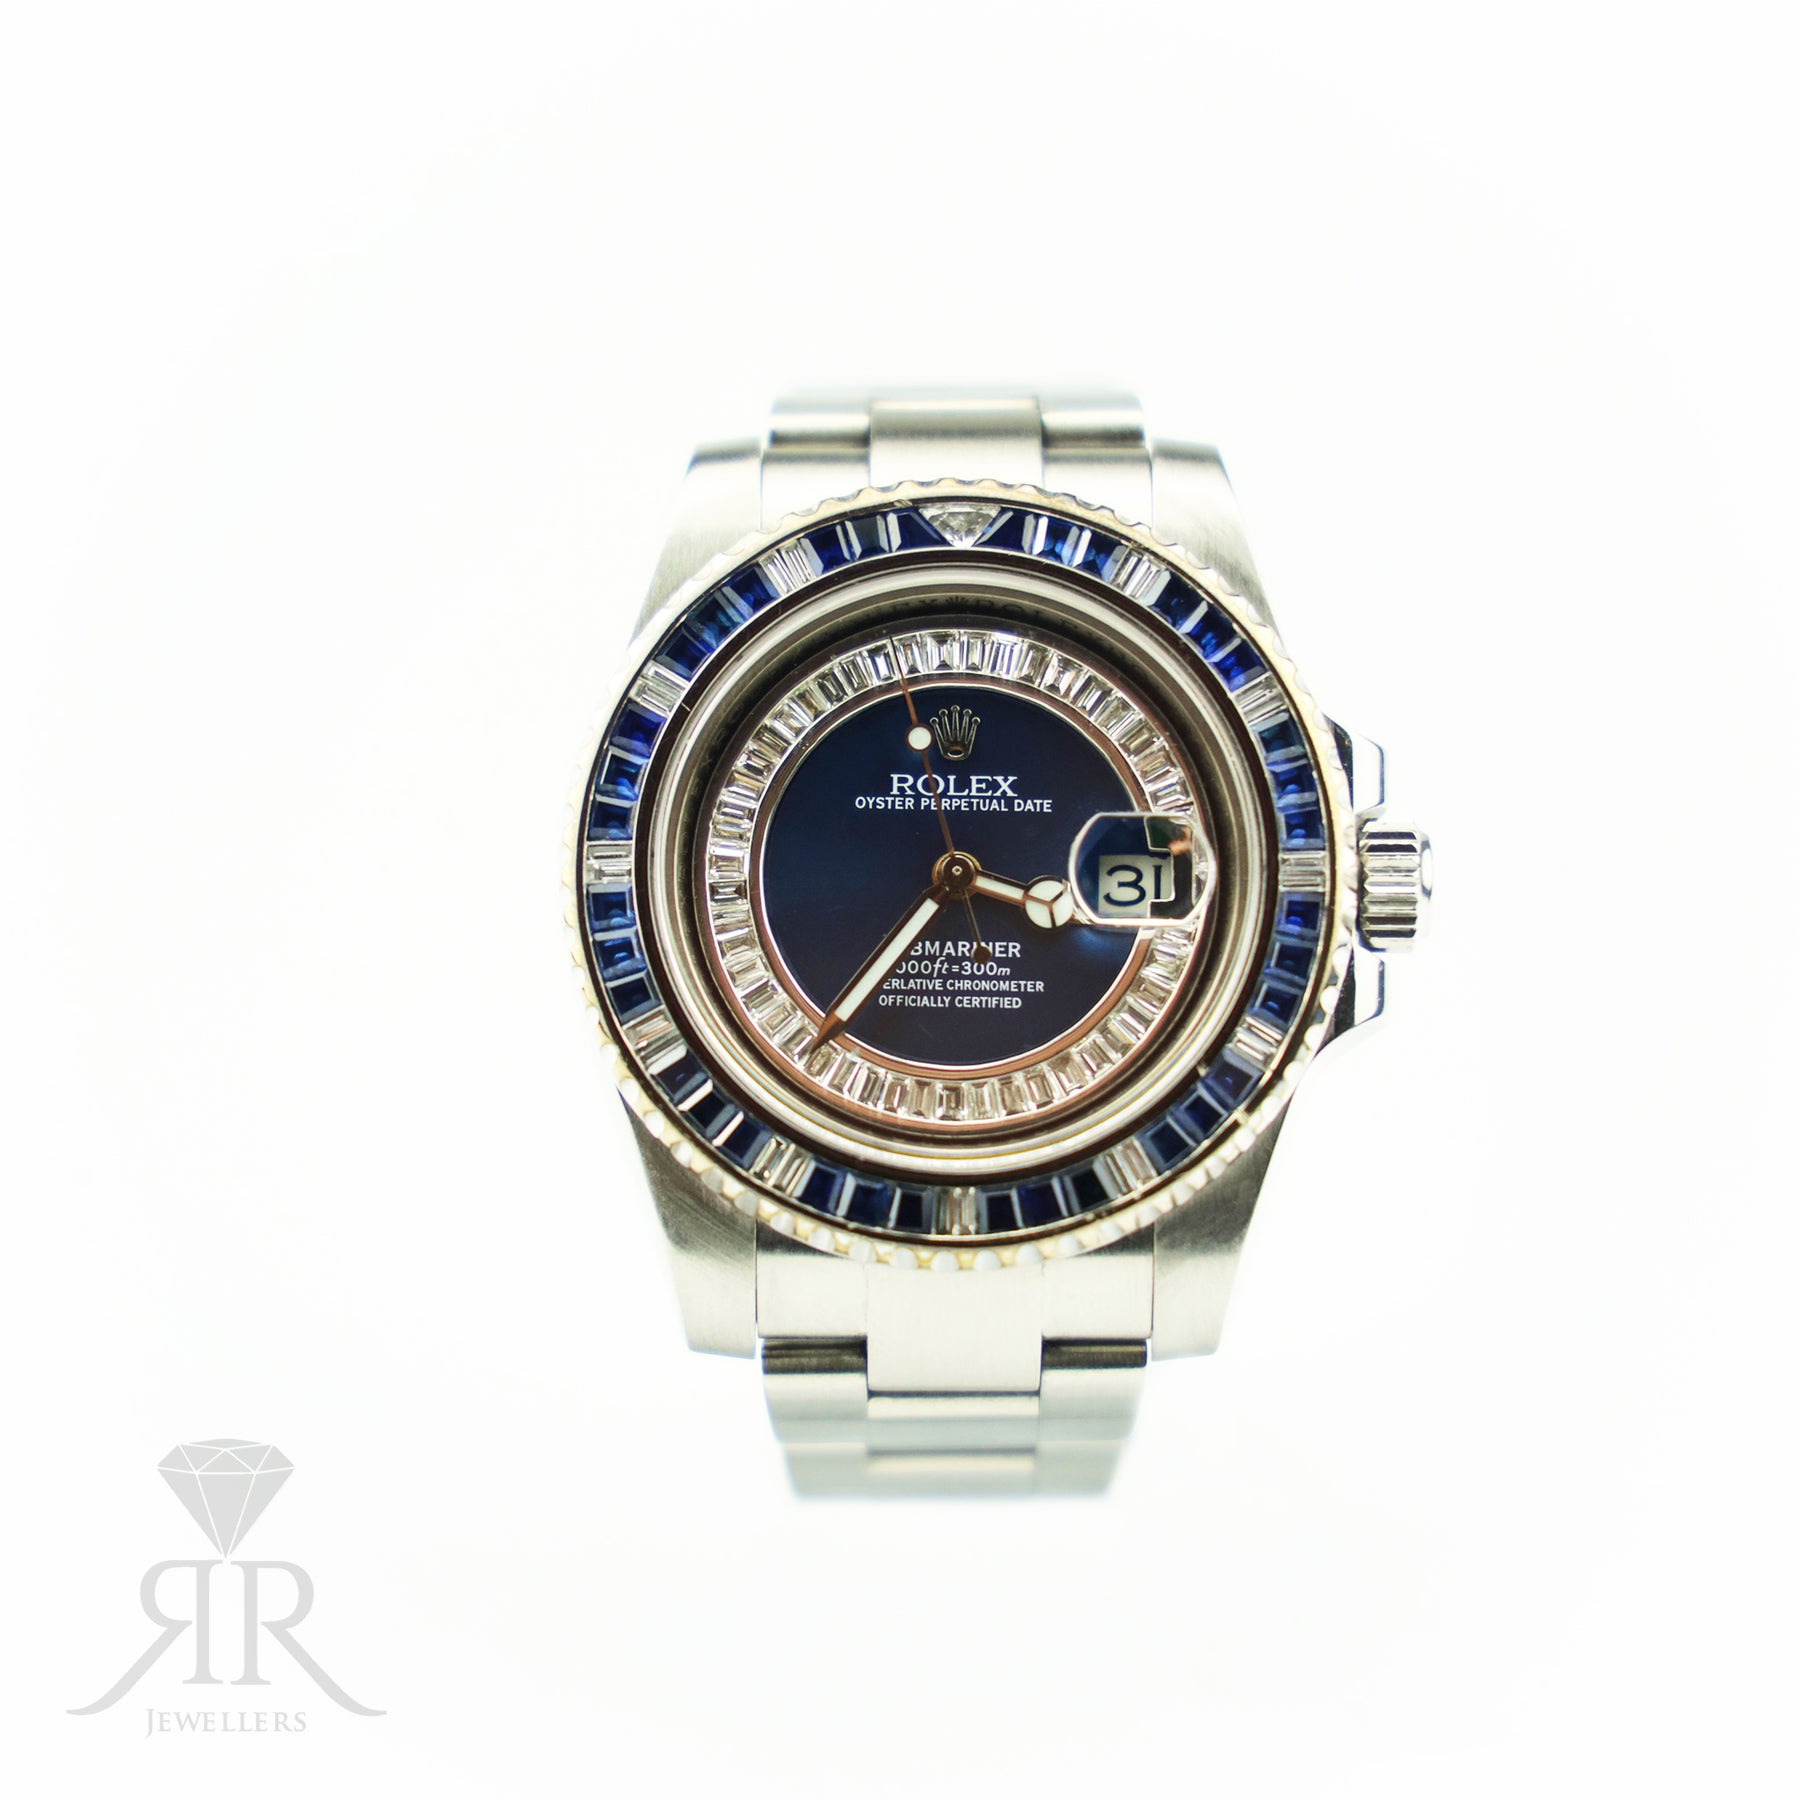 Rolex SUBMARINER blue dial diamond/sapphire dial and bezel